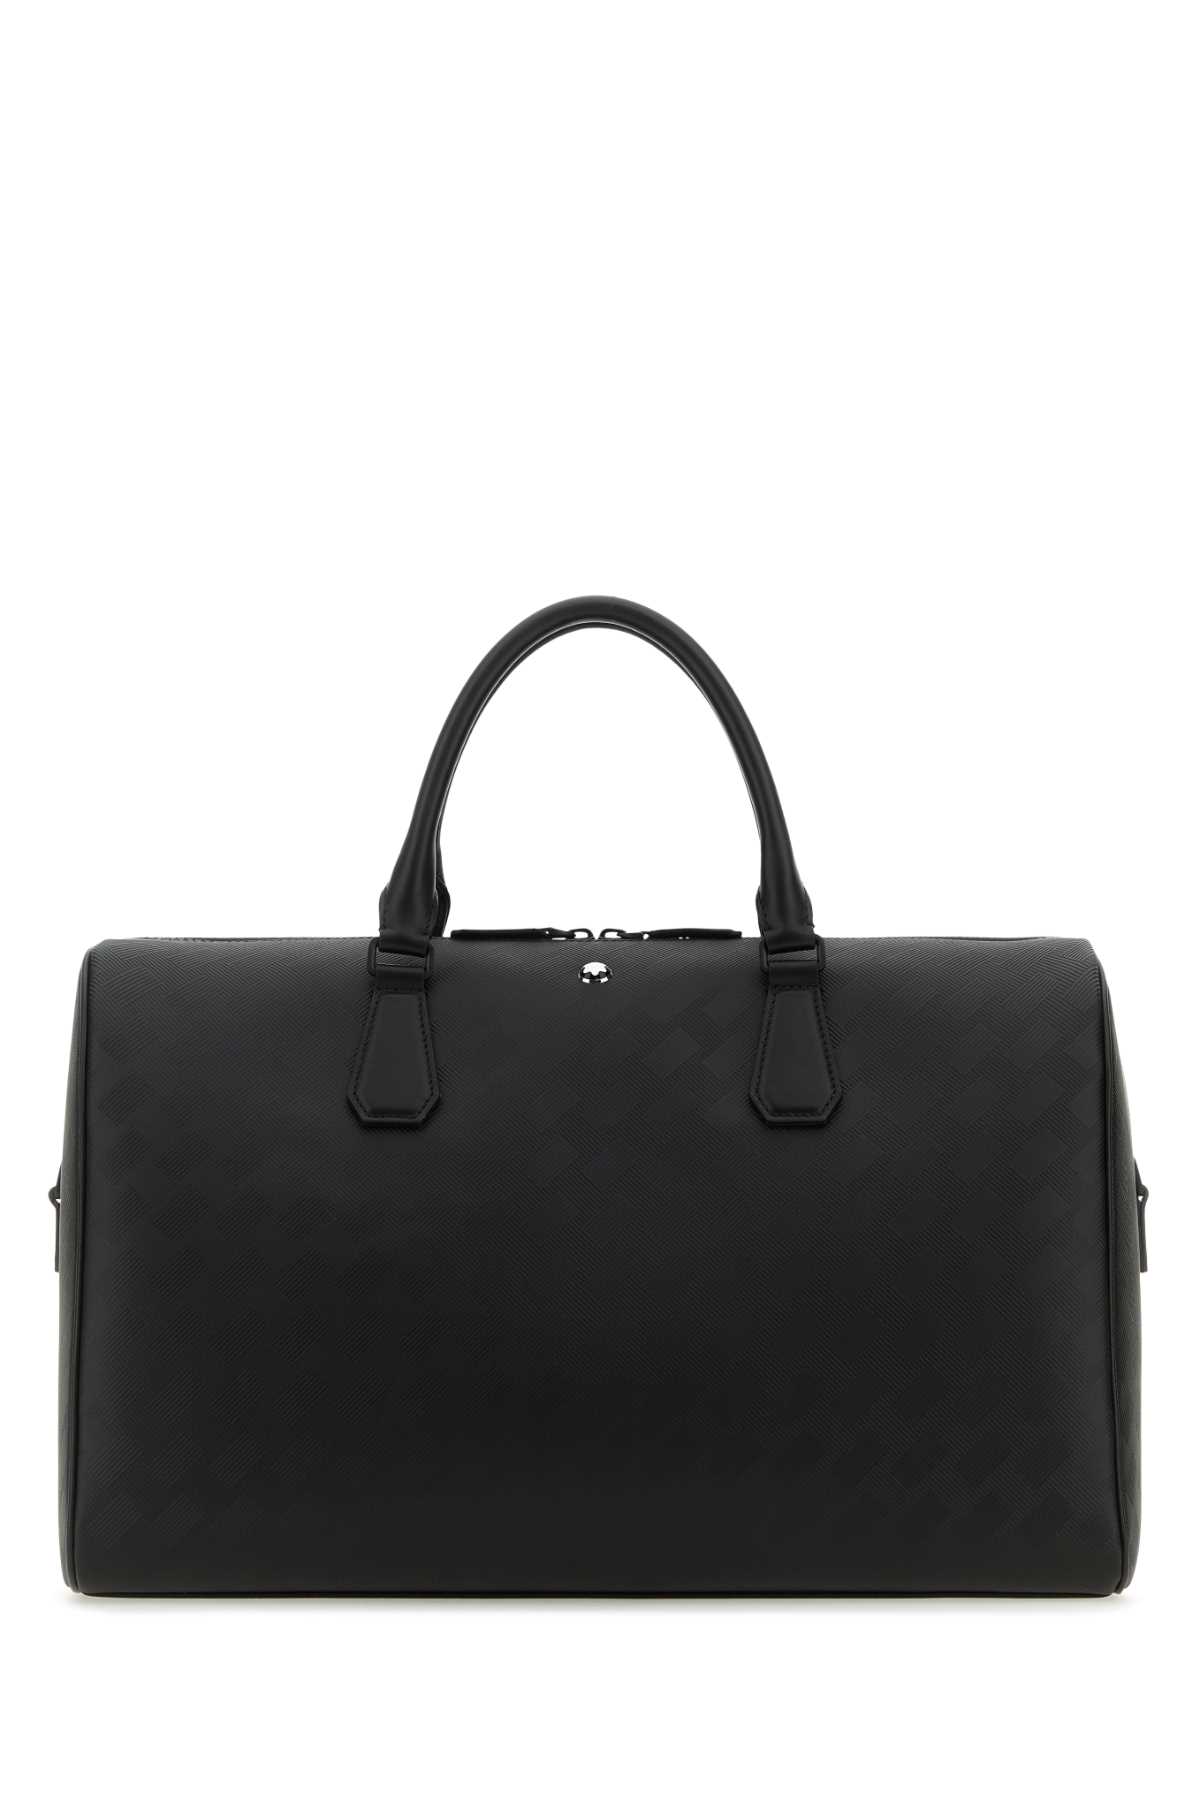 Shop Montblanc Black Leather 142 Travel Bag